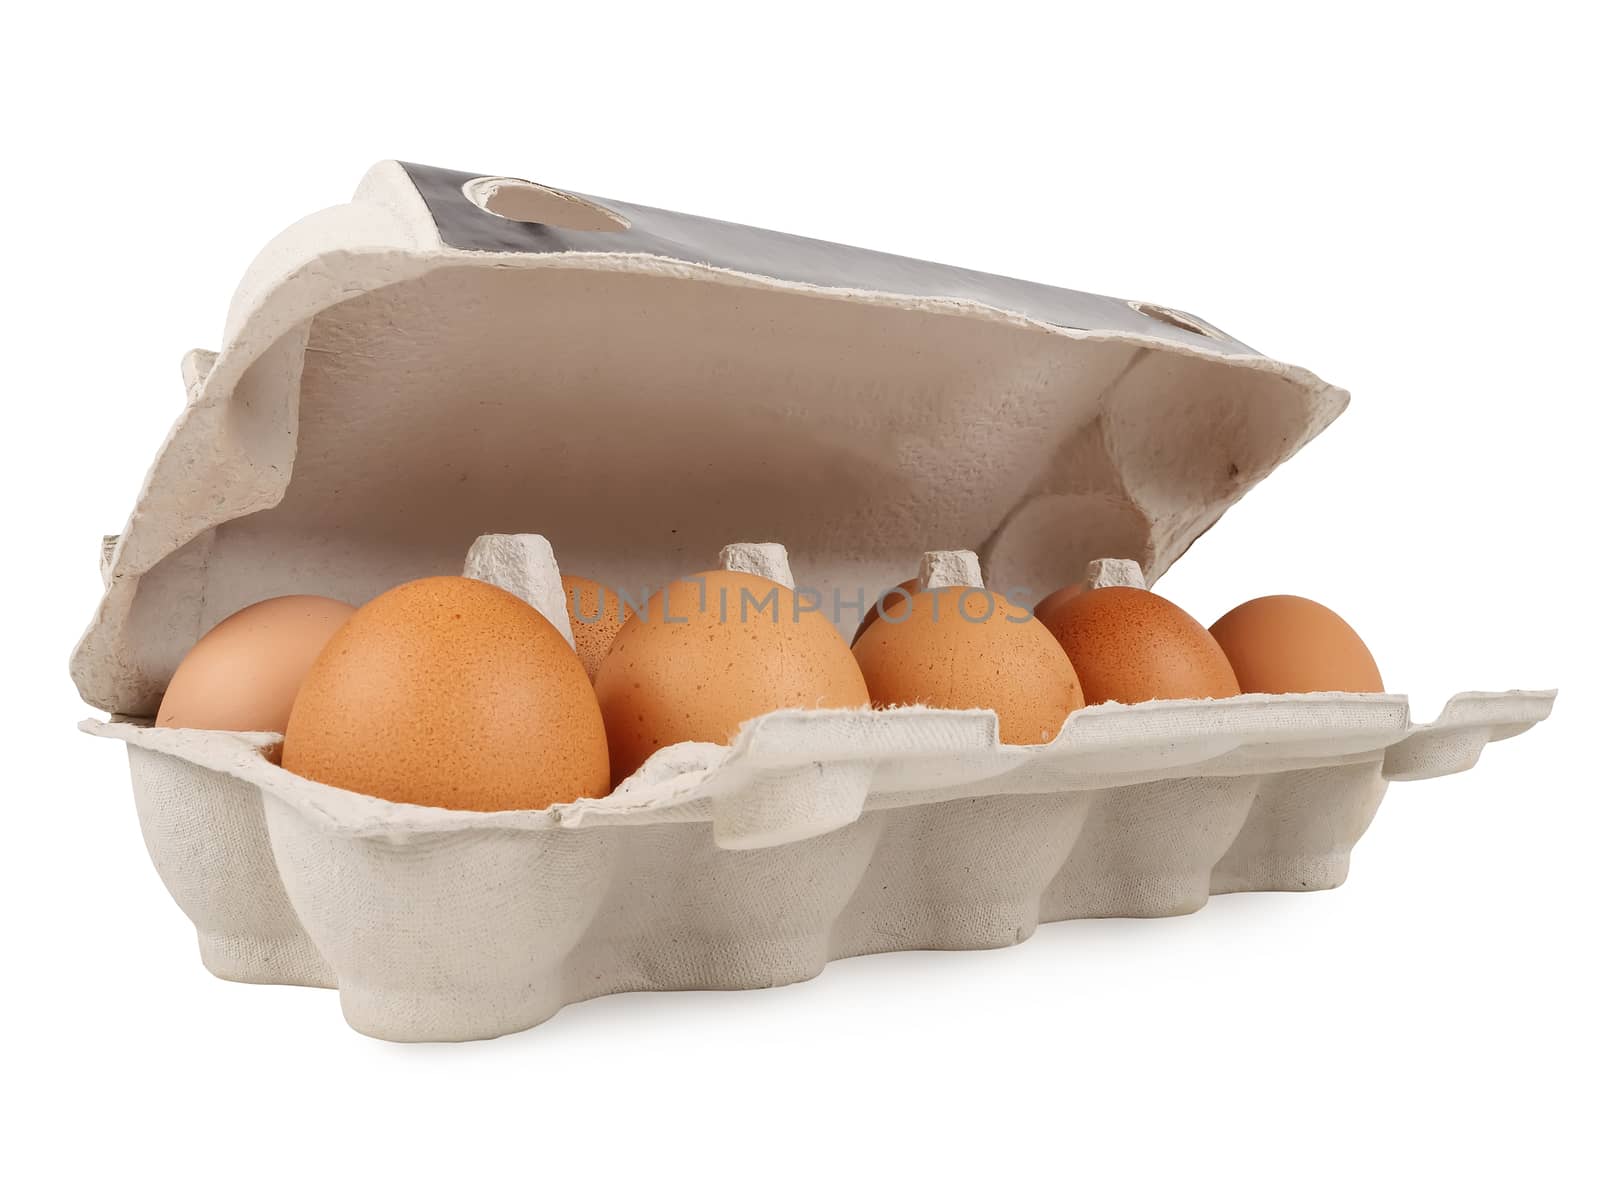 ten fresh eggs in carton package, studio shot